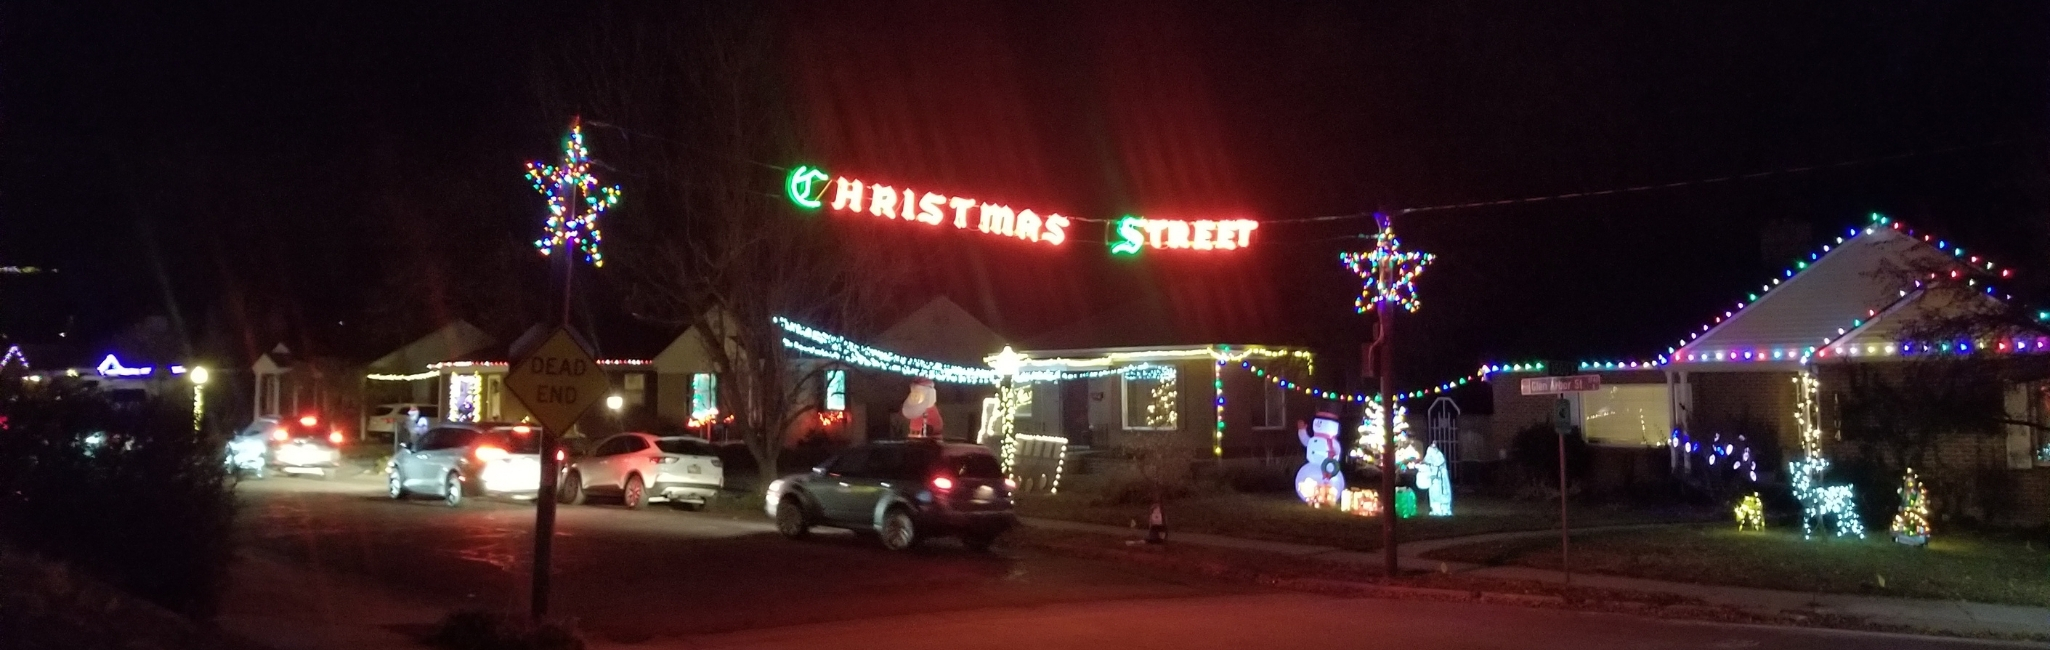 christmas street.jpg